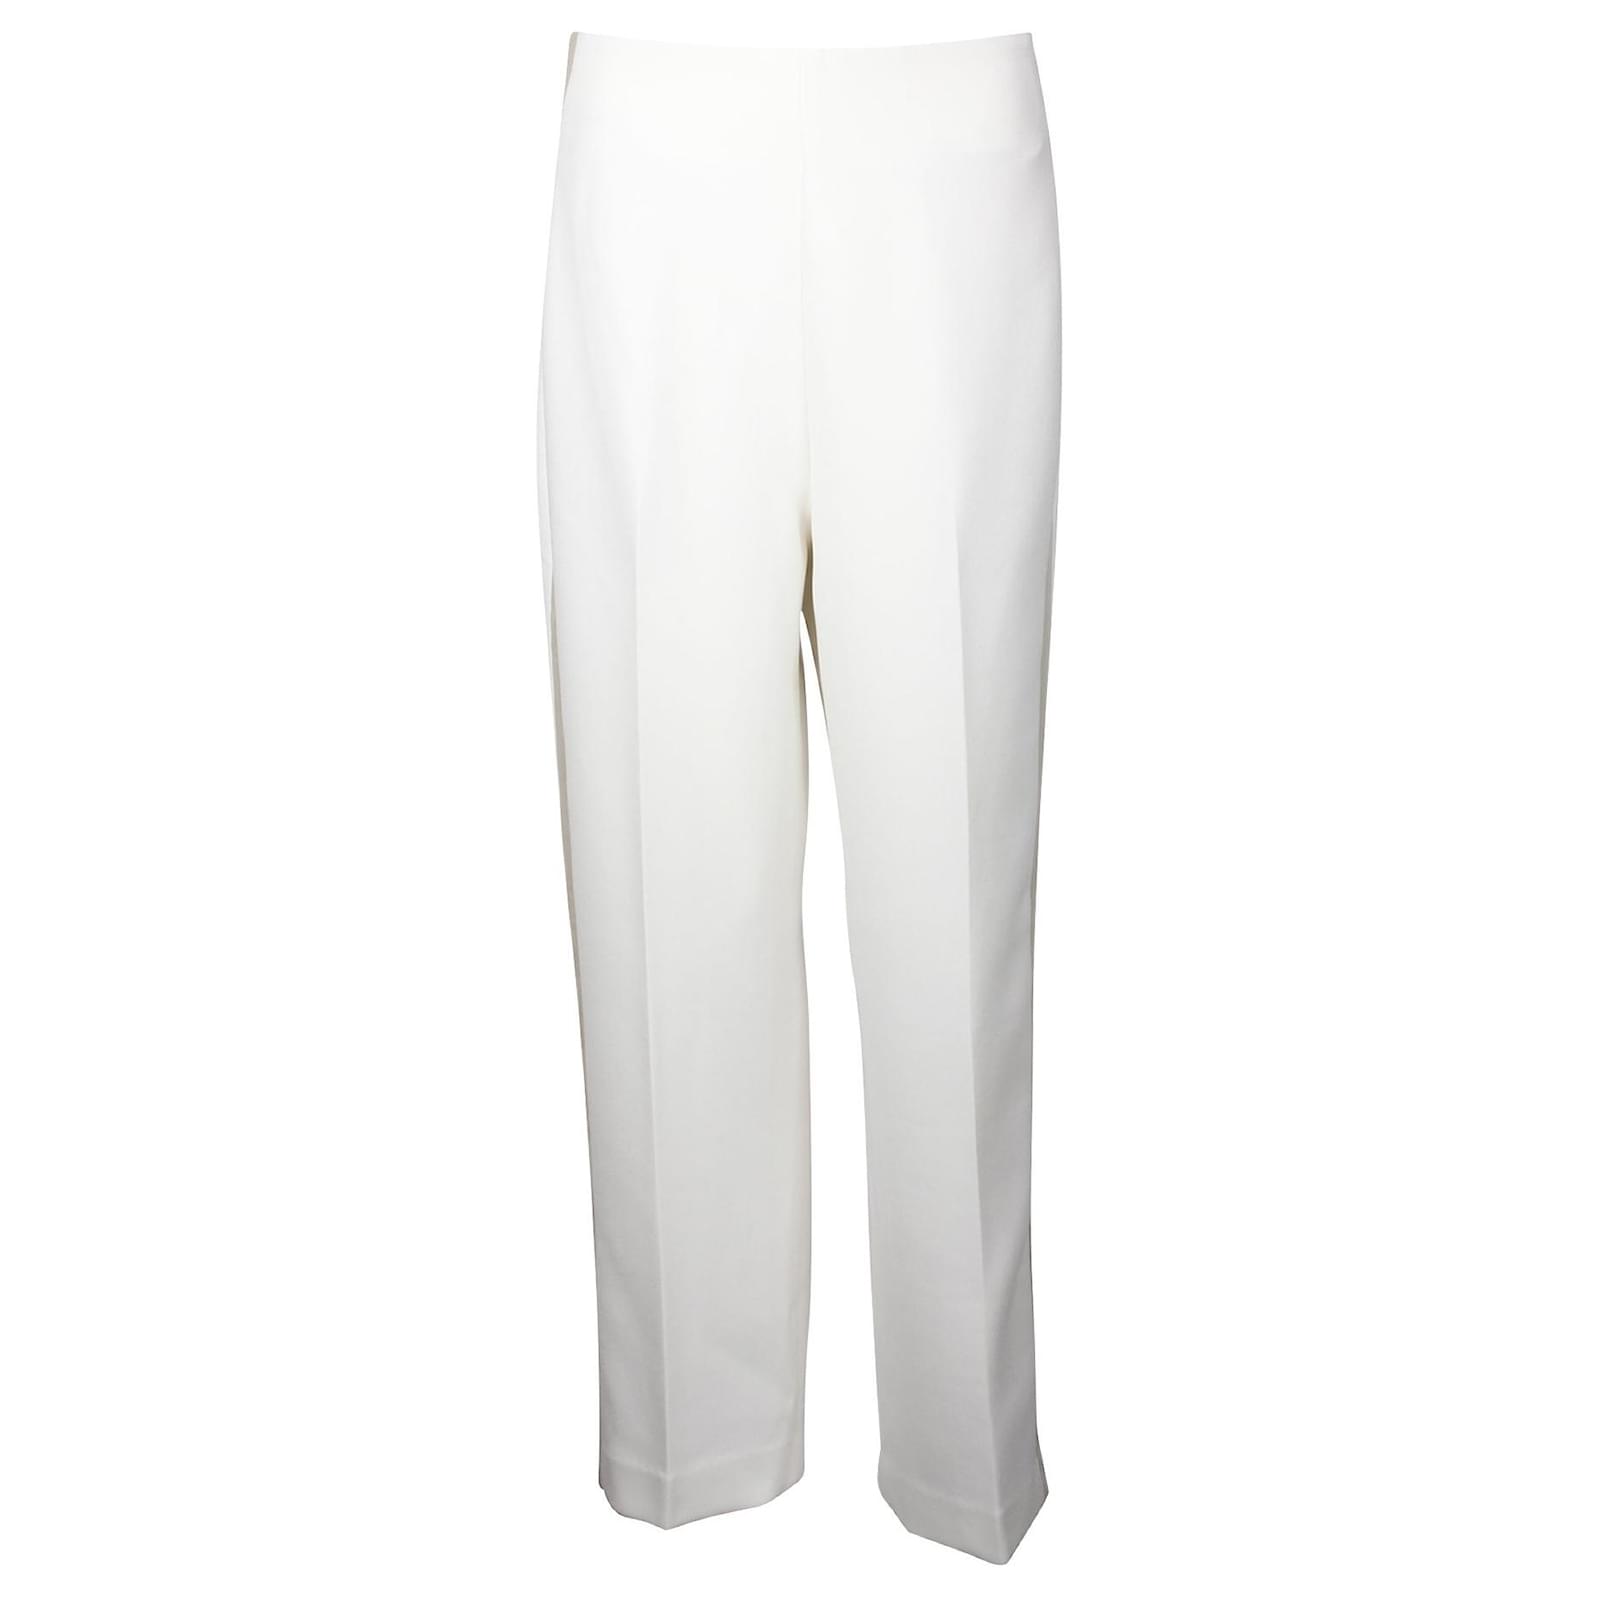 https://cdn1.jolicloset.com/imgr/full/2023/02/786681-1/blanco-otro-elegantes-pantalones-color-crema-claro-de-talle-alto-con-paneles-laterales-color-beige.jpg